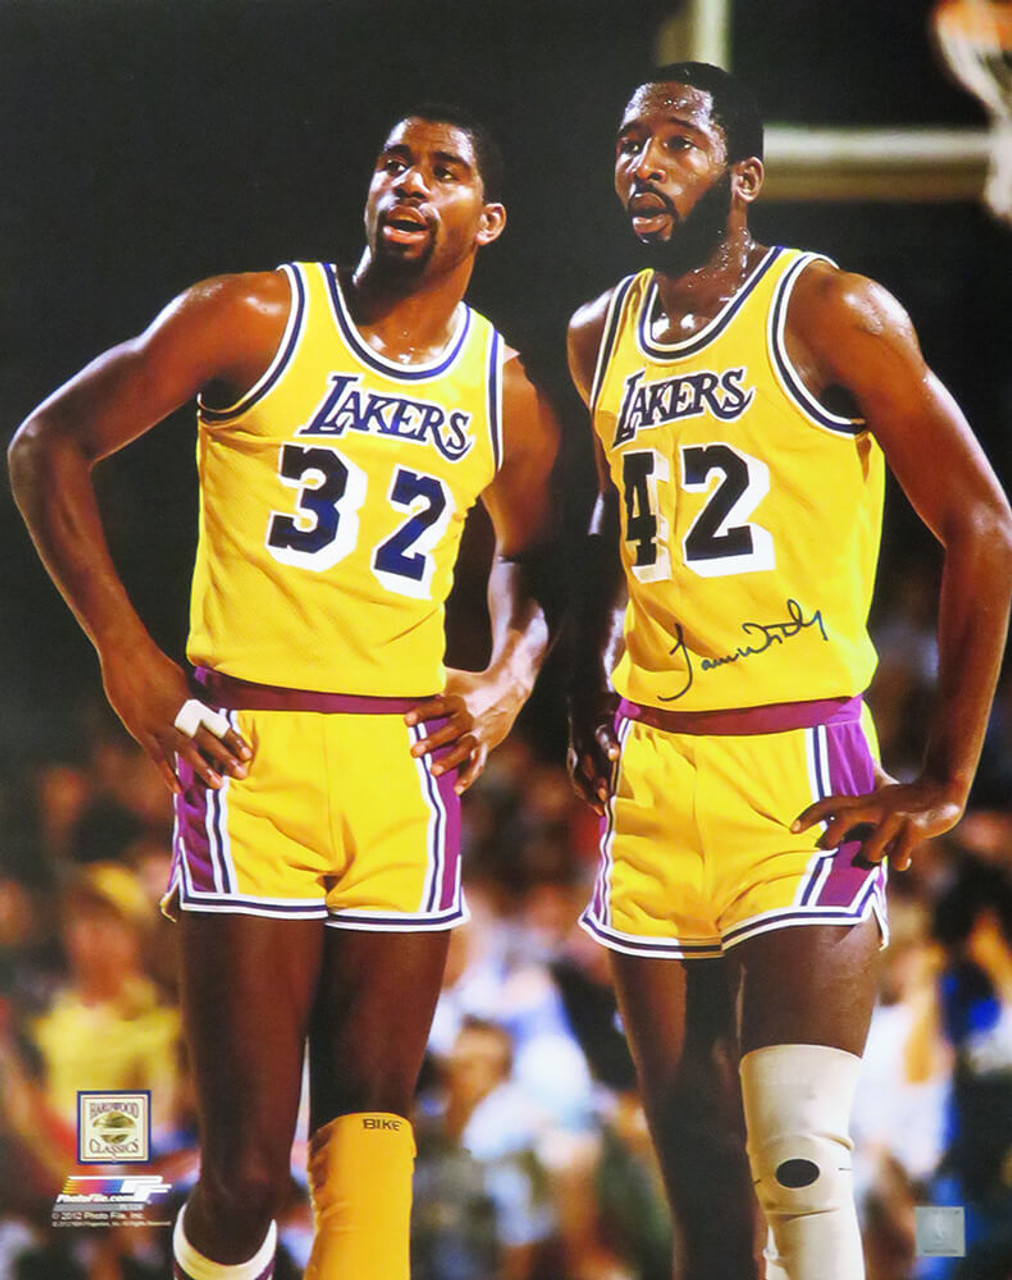 Magic Johnson Signed Los Angeles Lakers Gold Mitchell & Ness NBA Swingman  Basketball Jersey - Schwartz Authentic